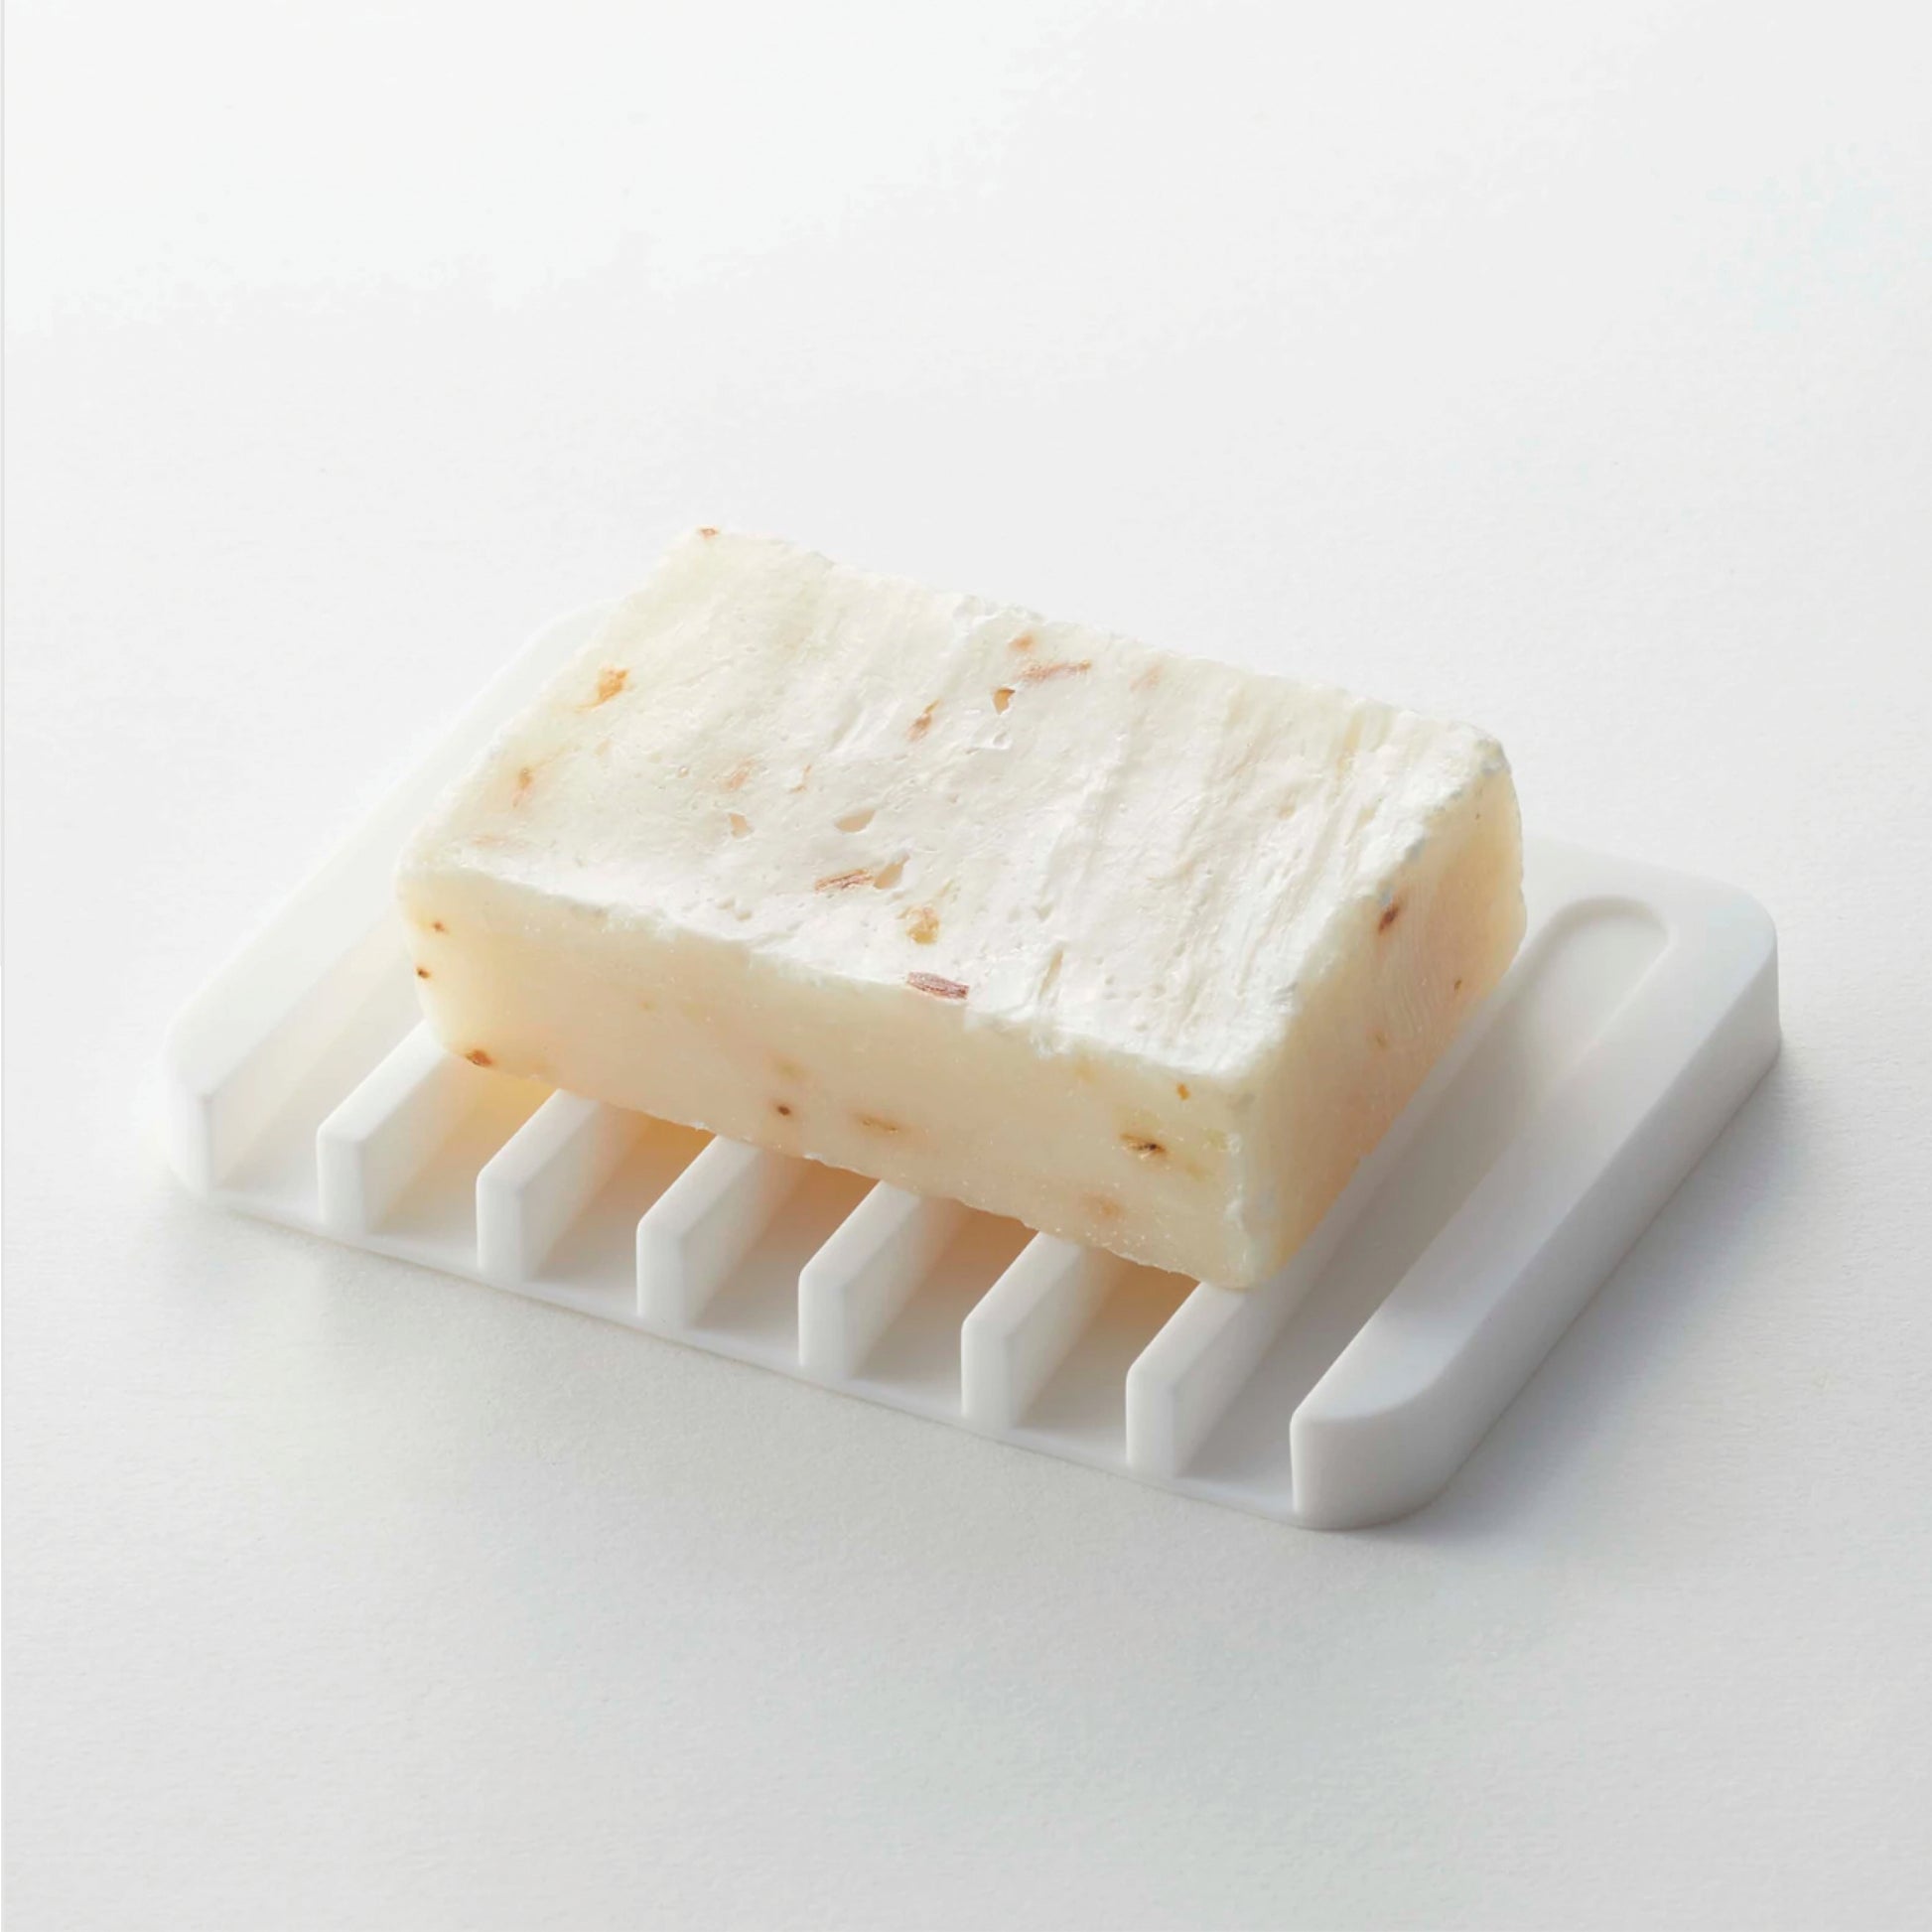 Yamazaki Flow Silicone Soap Tray in White